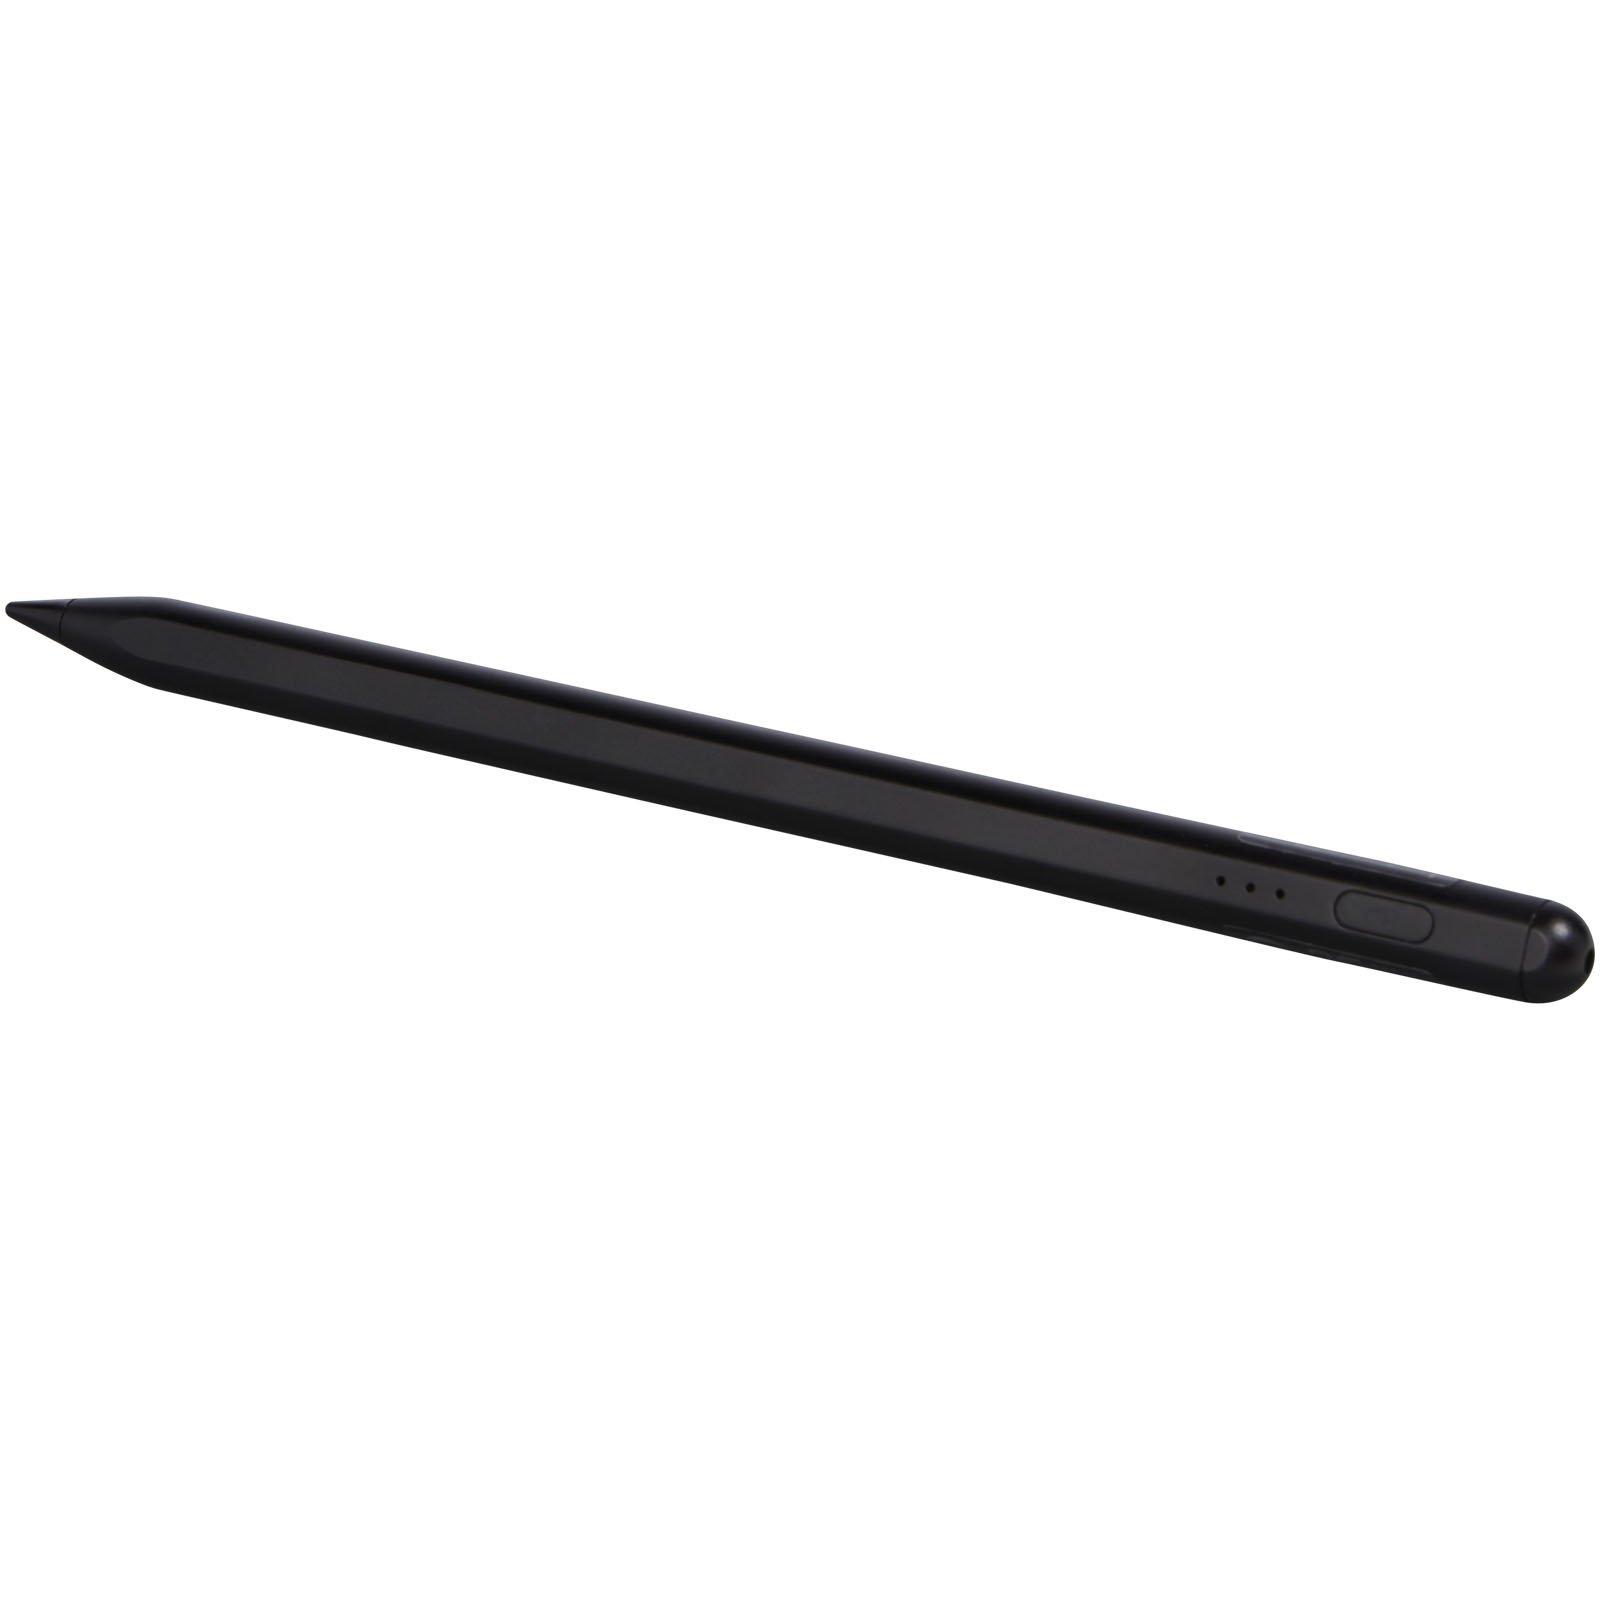 Technology - Hybrid Active stylus pen for iPad